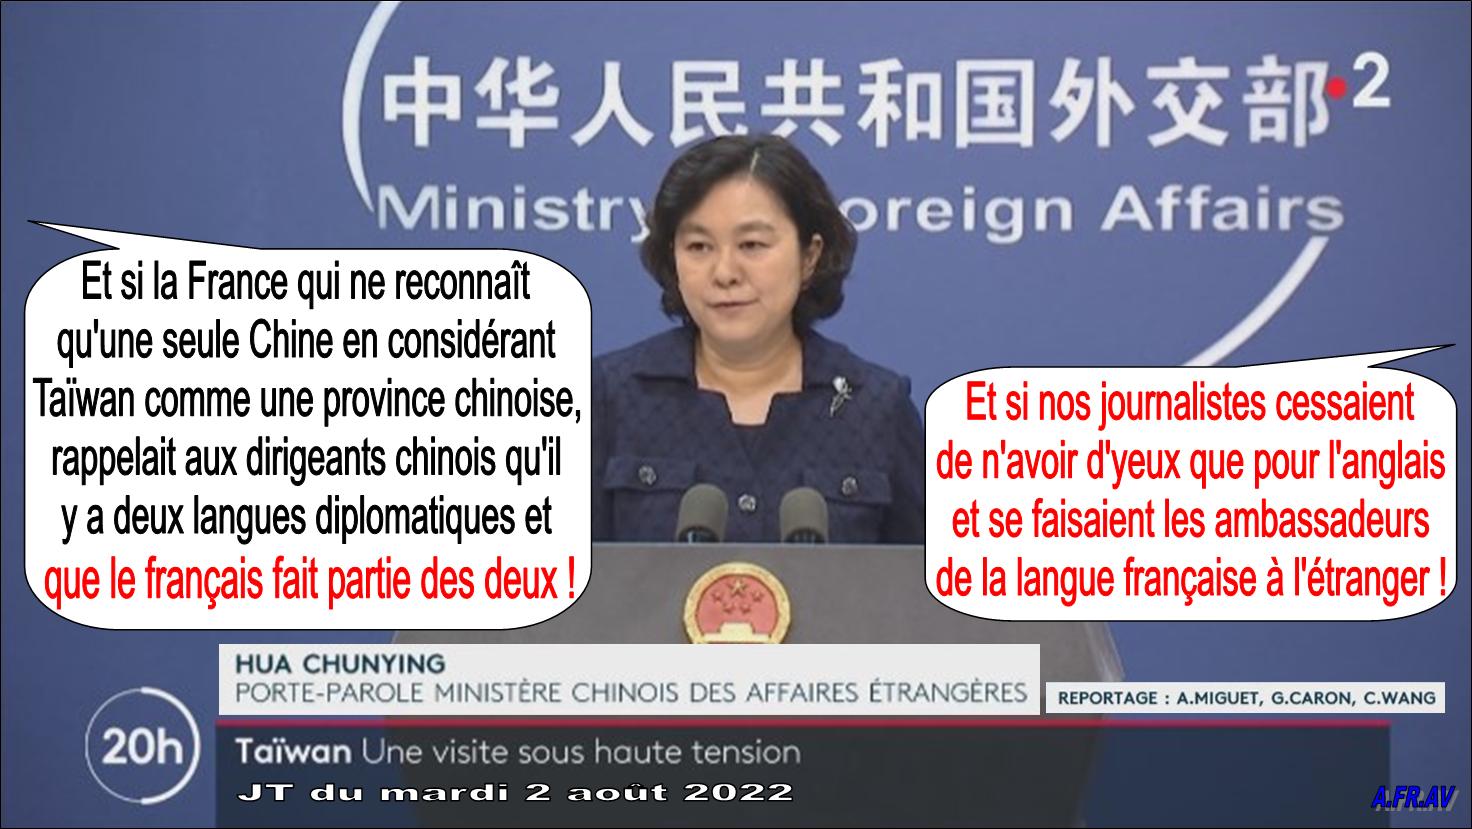 Hua Chunying, ministère chinois des Affaires étrangères, Ministry foreign Affairs